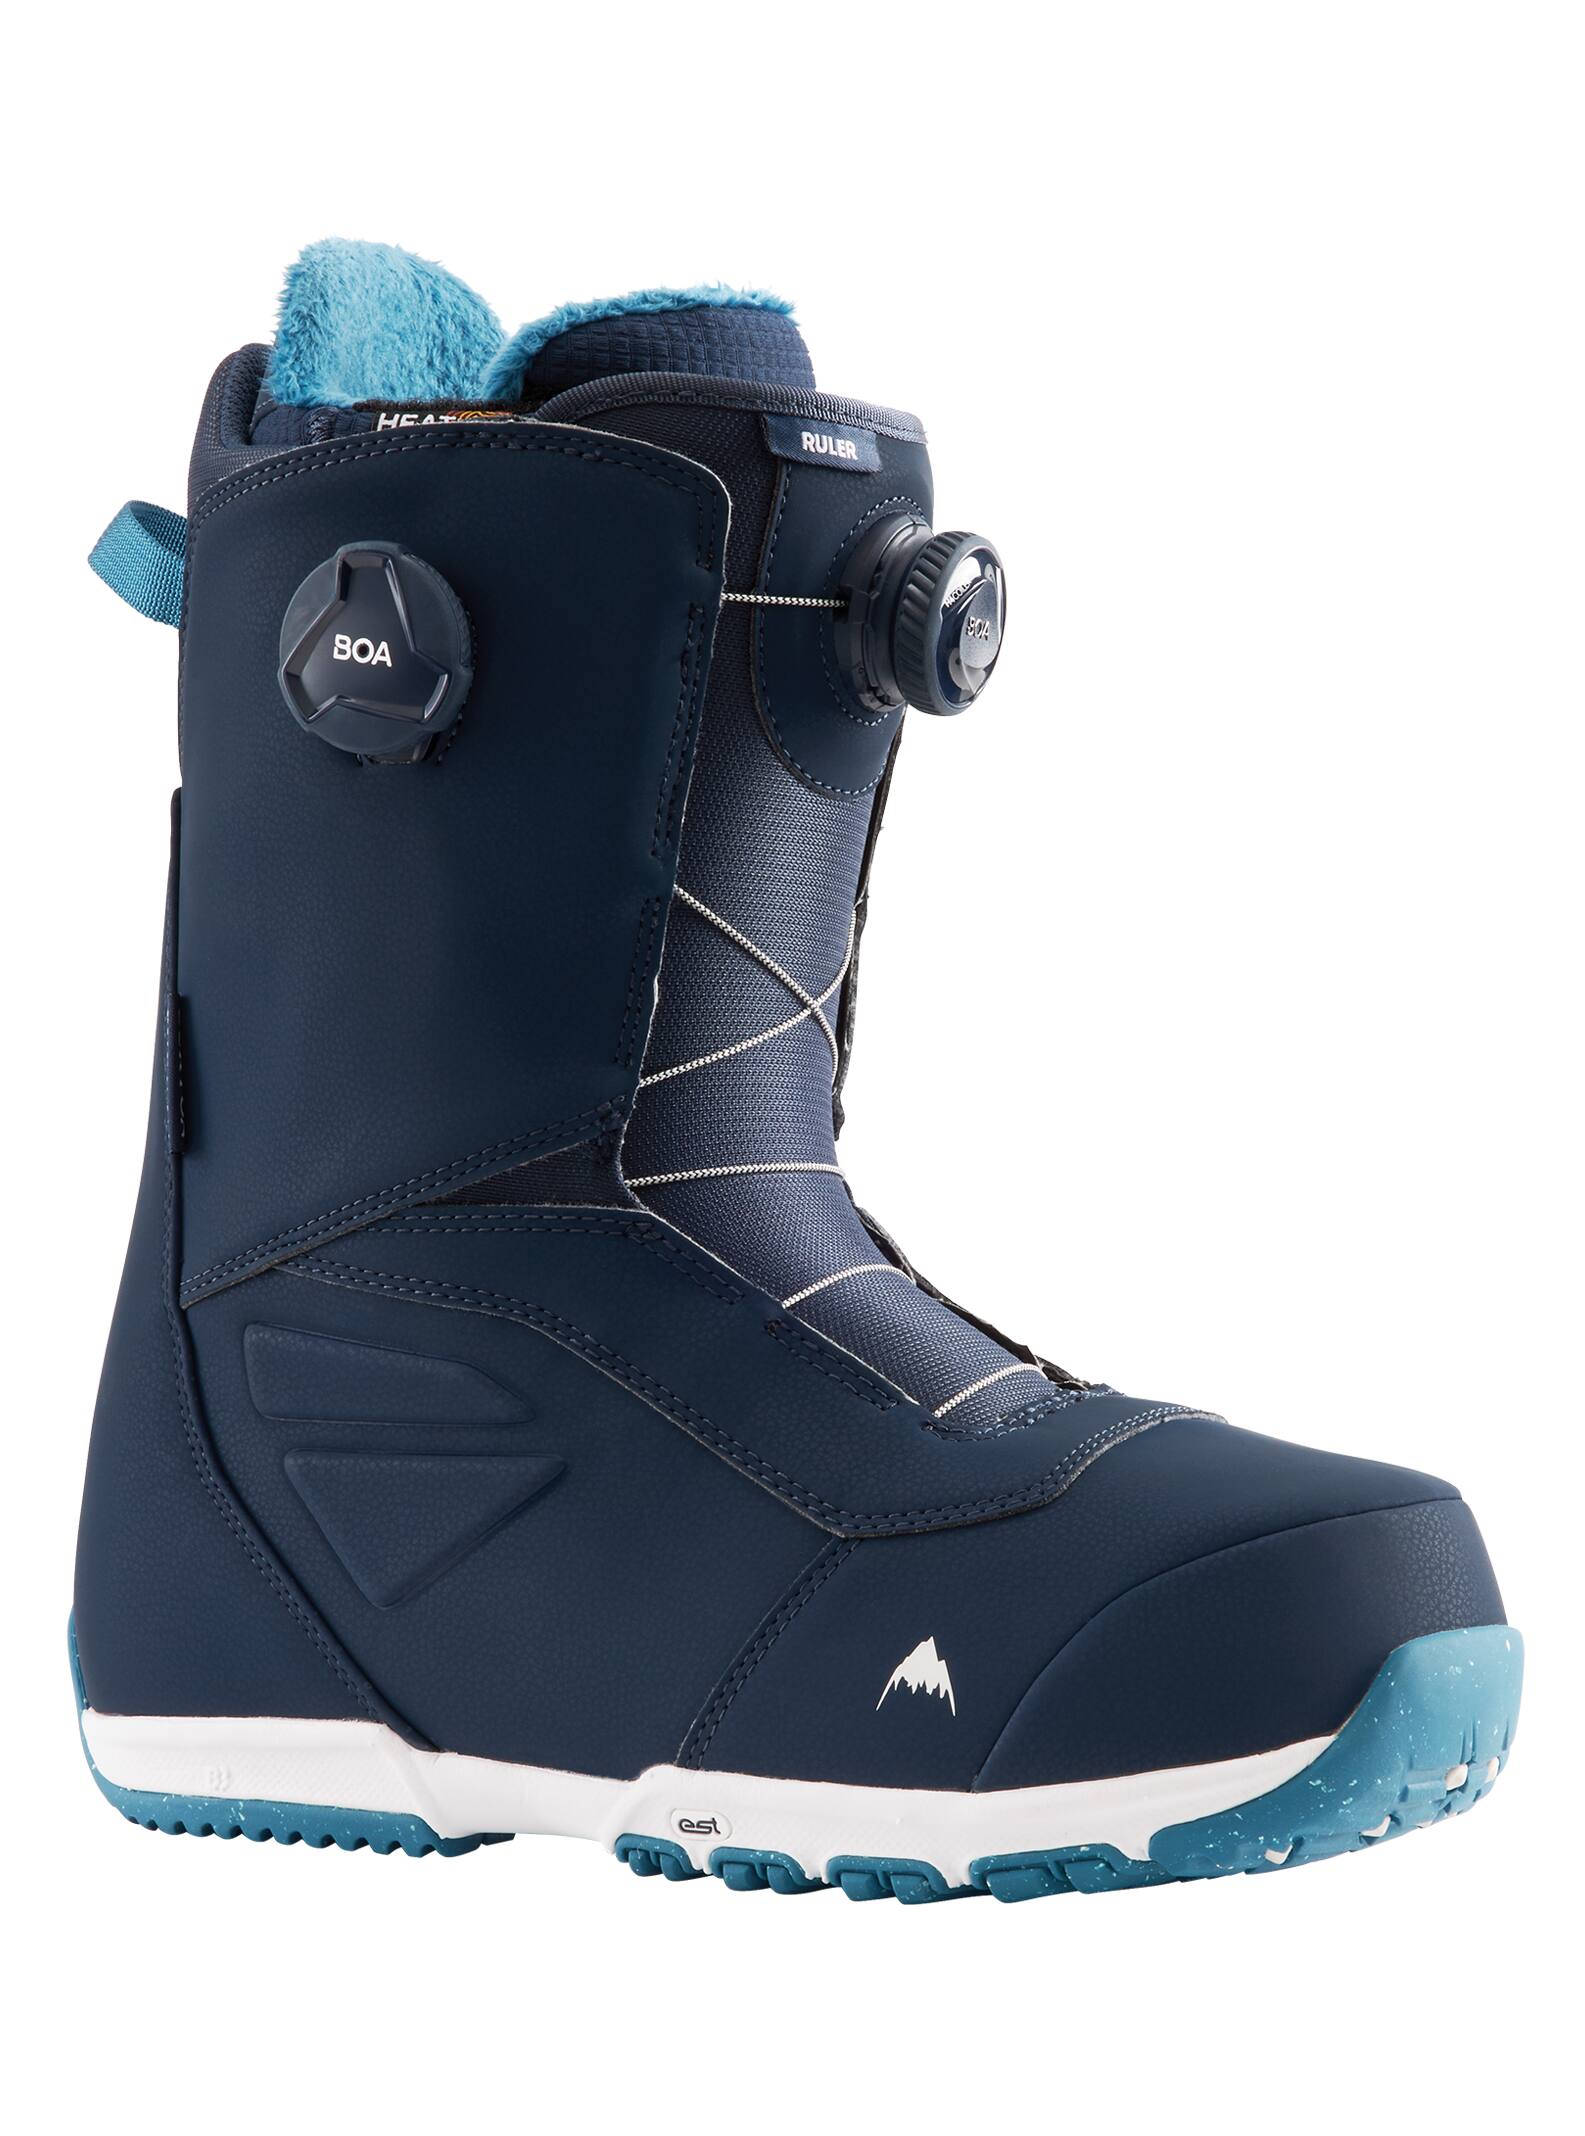 other aspect Freeze Men's Burton Ruler BOA® Snowboard Boots - Wide | Burton.com Winter 2022 PT